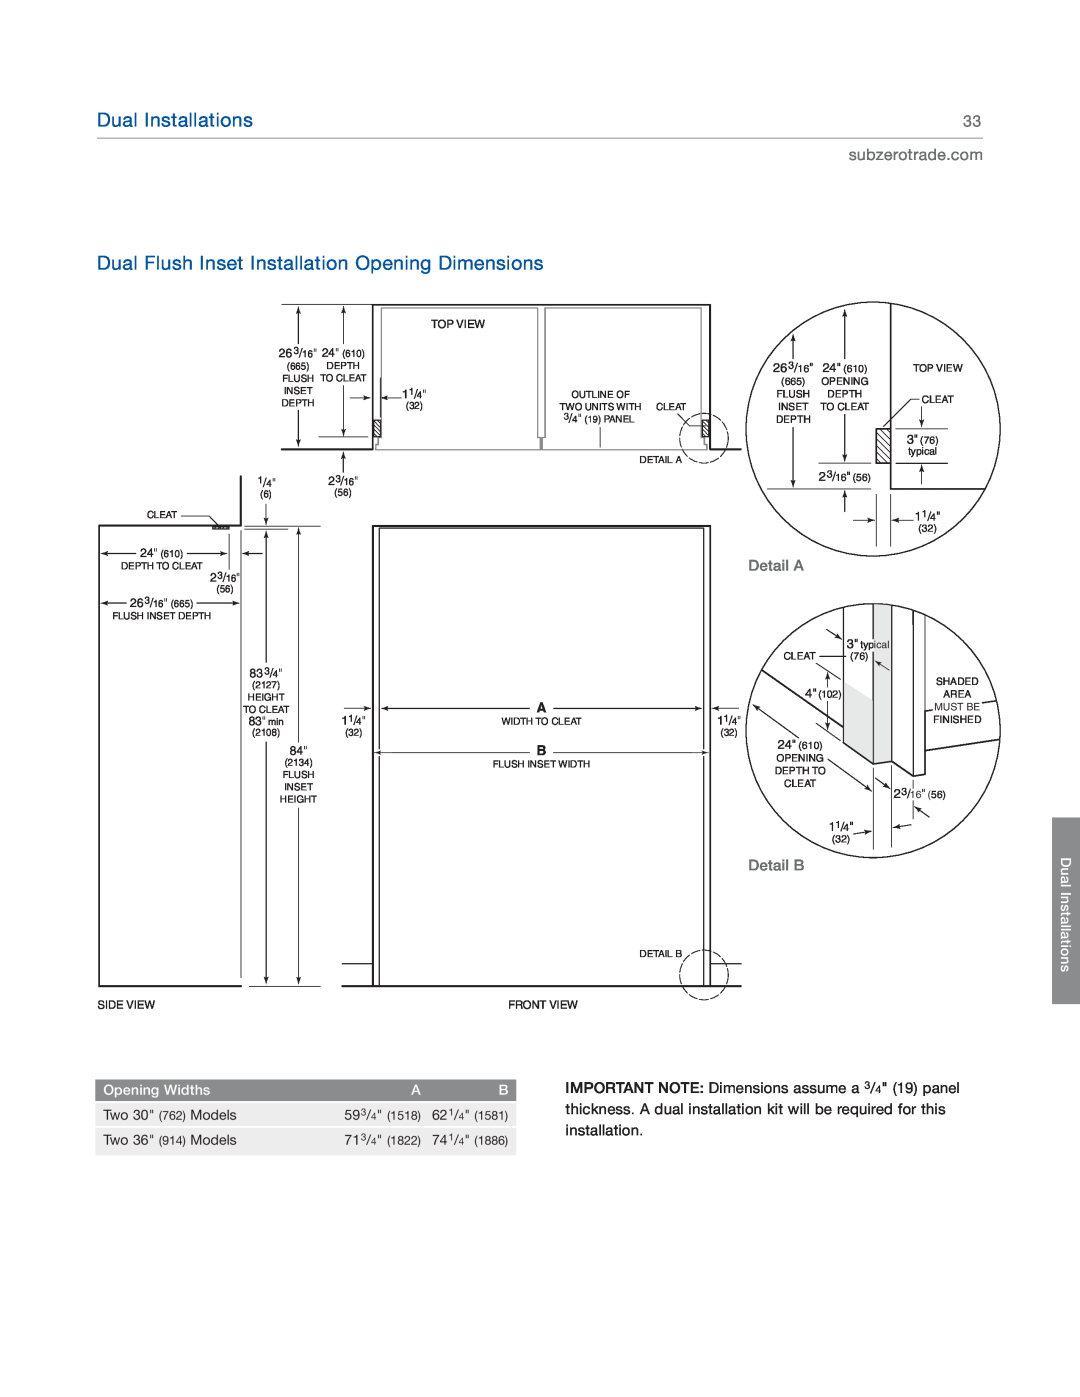 Sub-Zero BI-36UG Dual Flush Inset Installation Opening Dimensions, Dual Installations, subzerotrade.com, Detail A, 23/16 